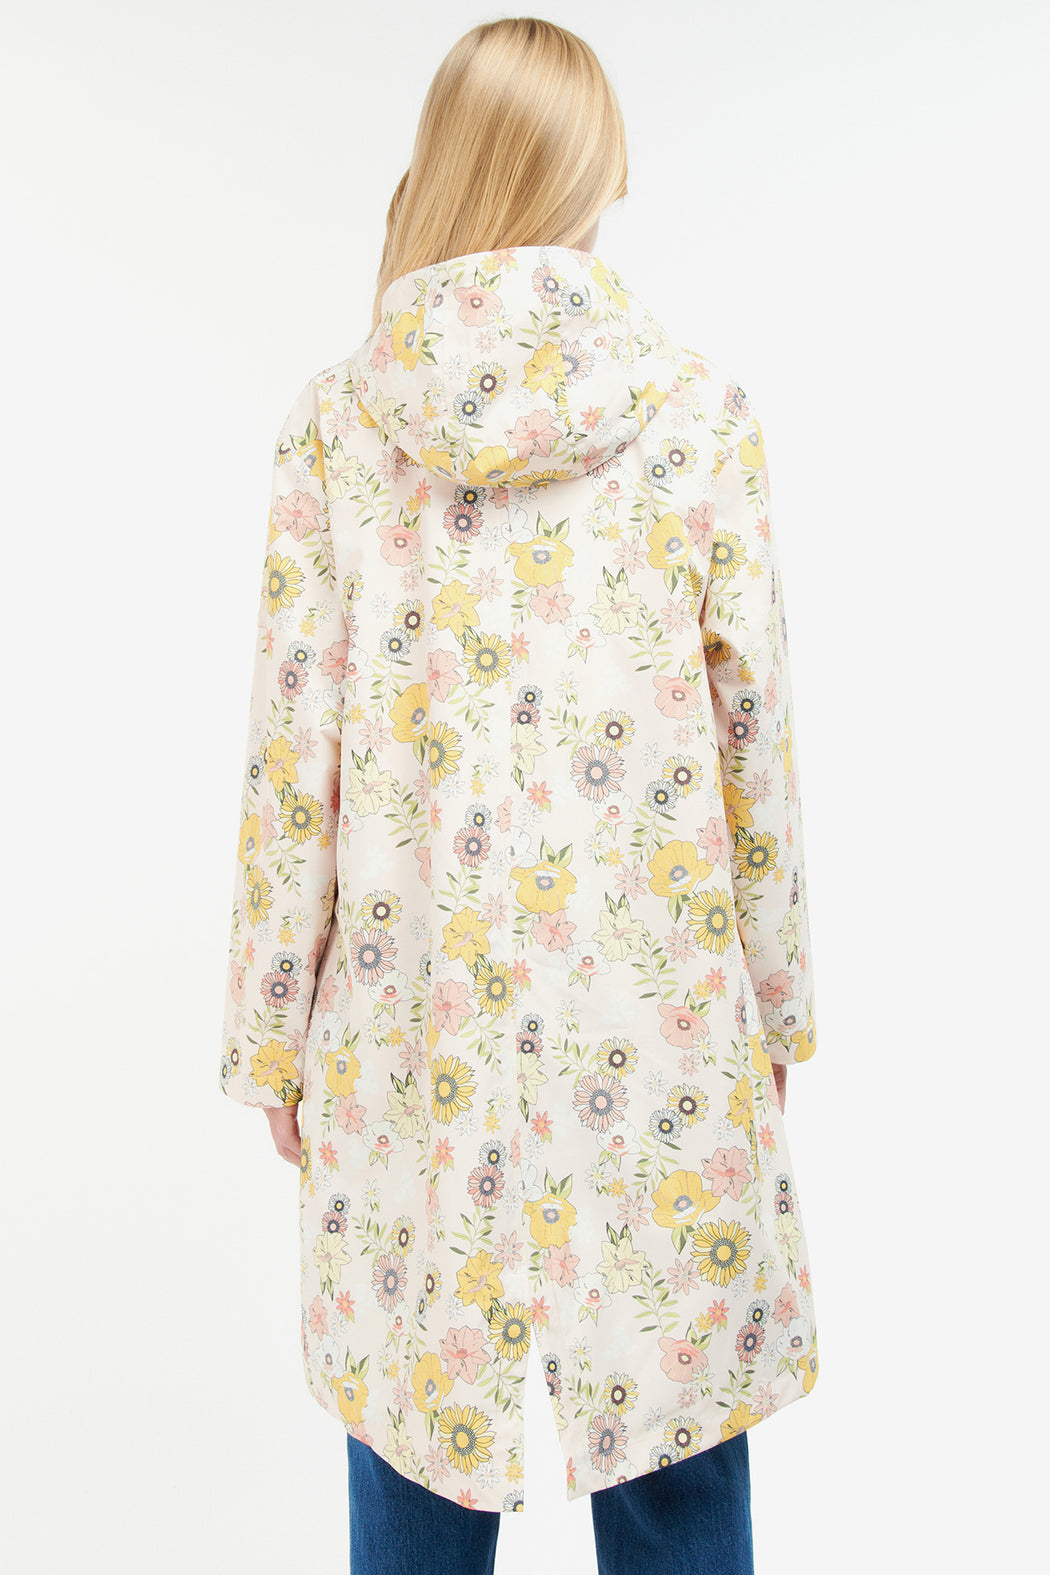 Barbour-Printed-Hama-Showerproof-Jacket-Mid-Summer-Floral